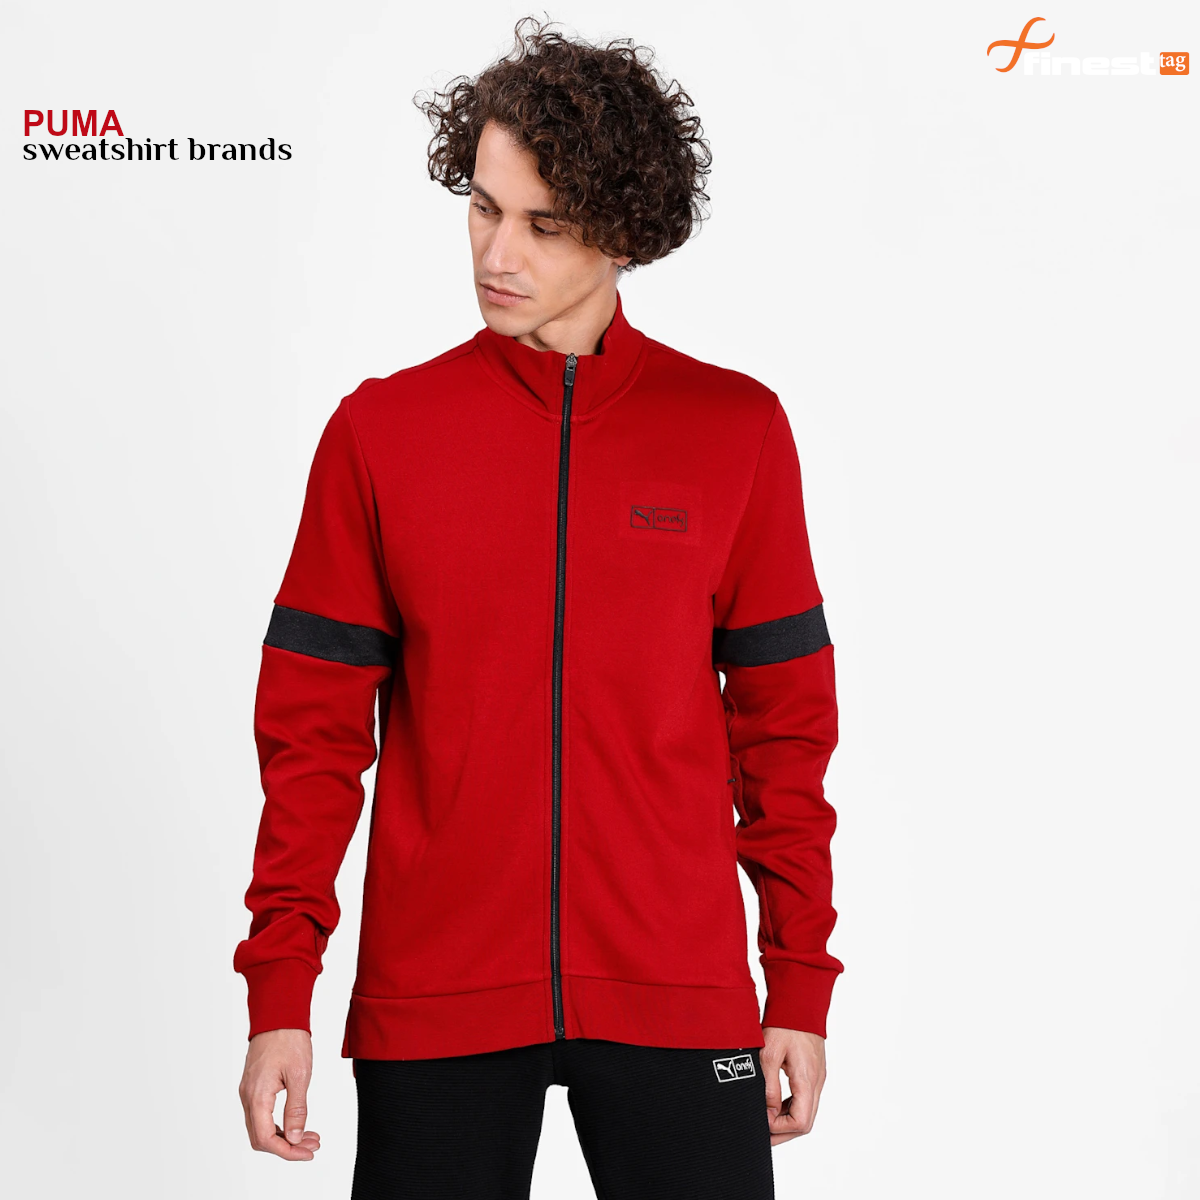 PUMA sweatshirt brands @ Best Price in India